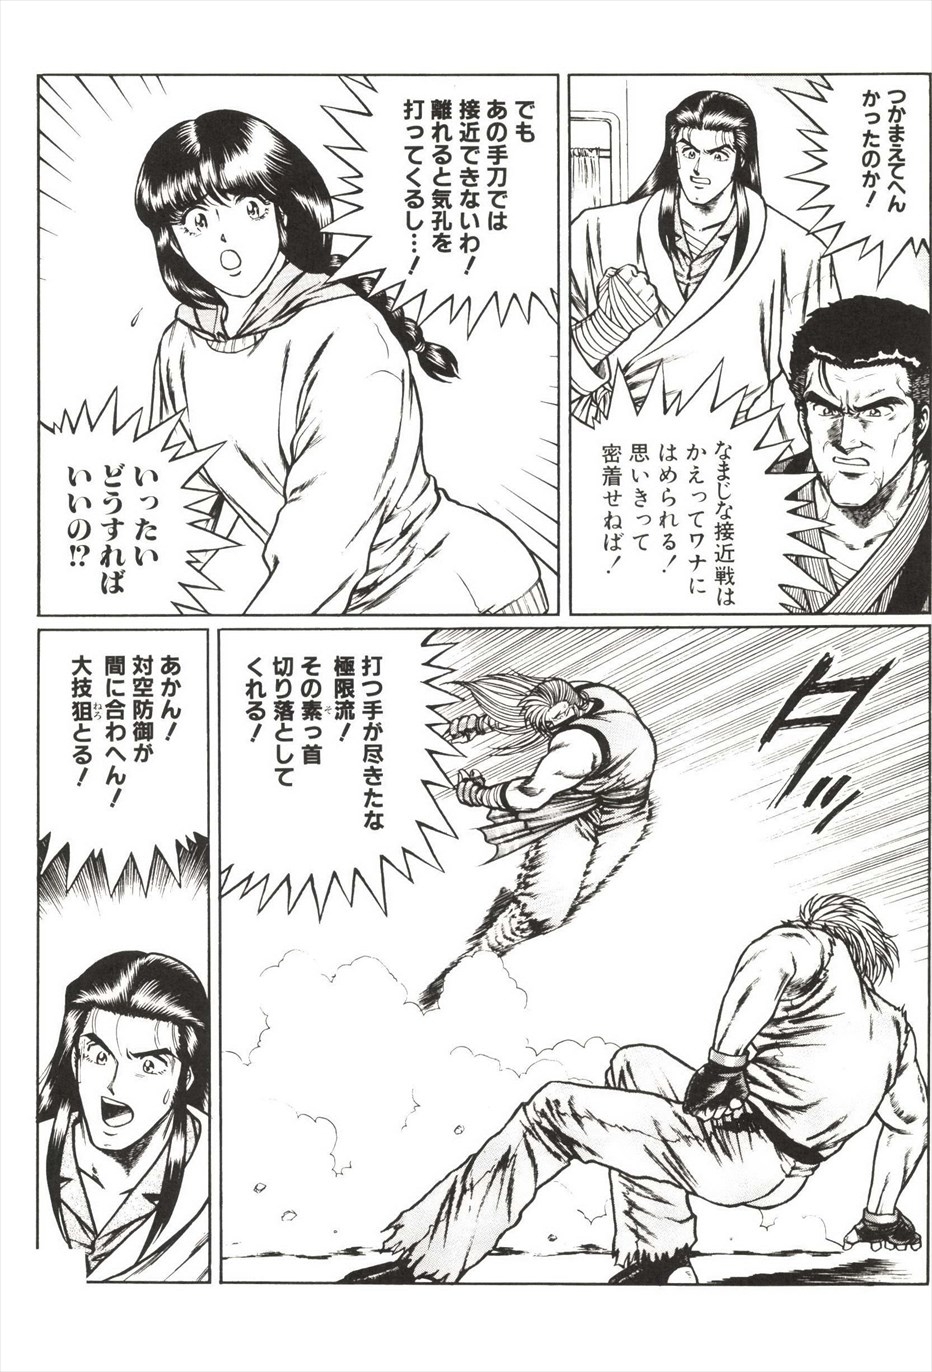 [amazishi etsuya] ART OF FIGHTING ryuuko no ken 2-2 82